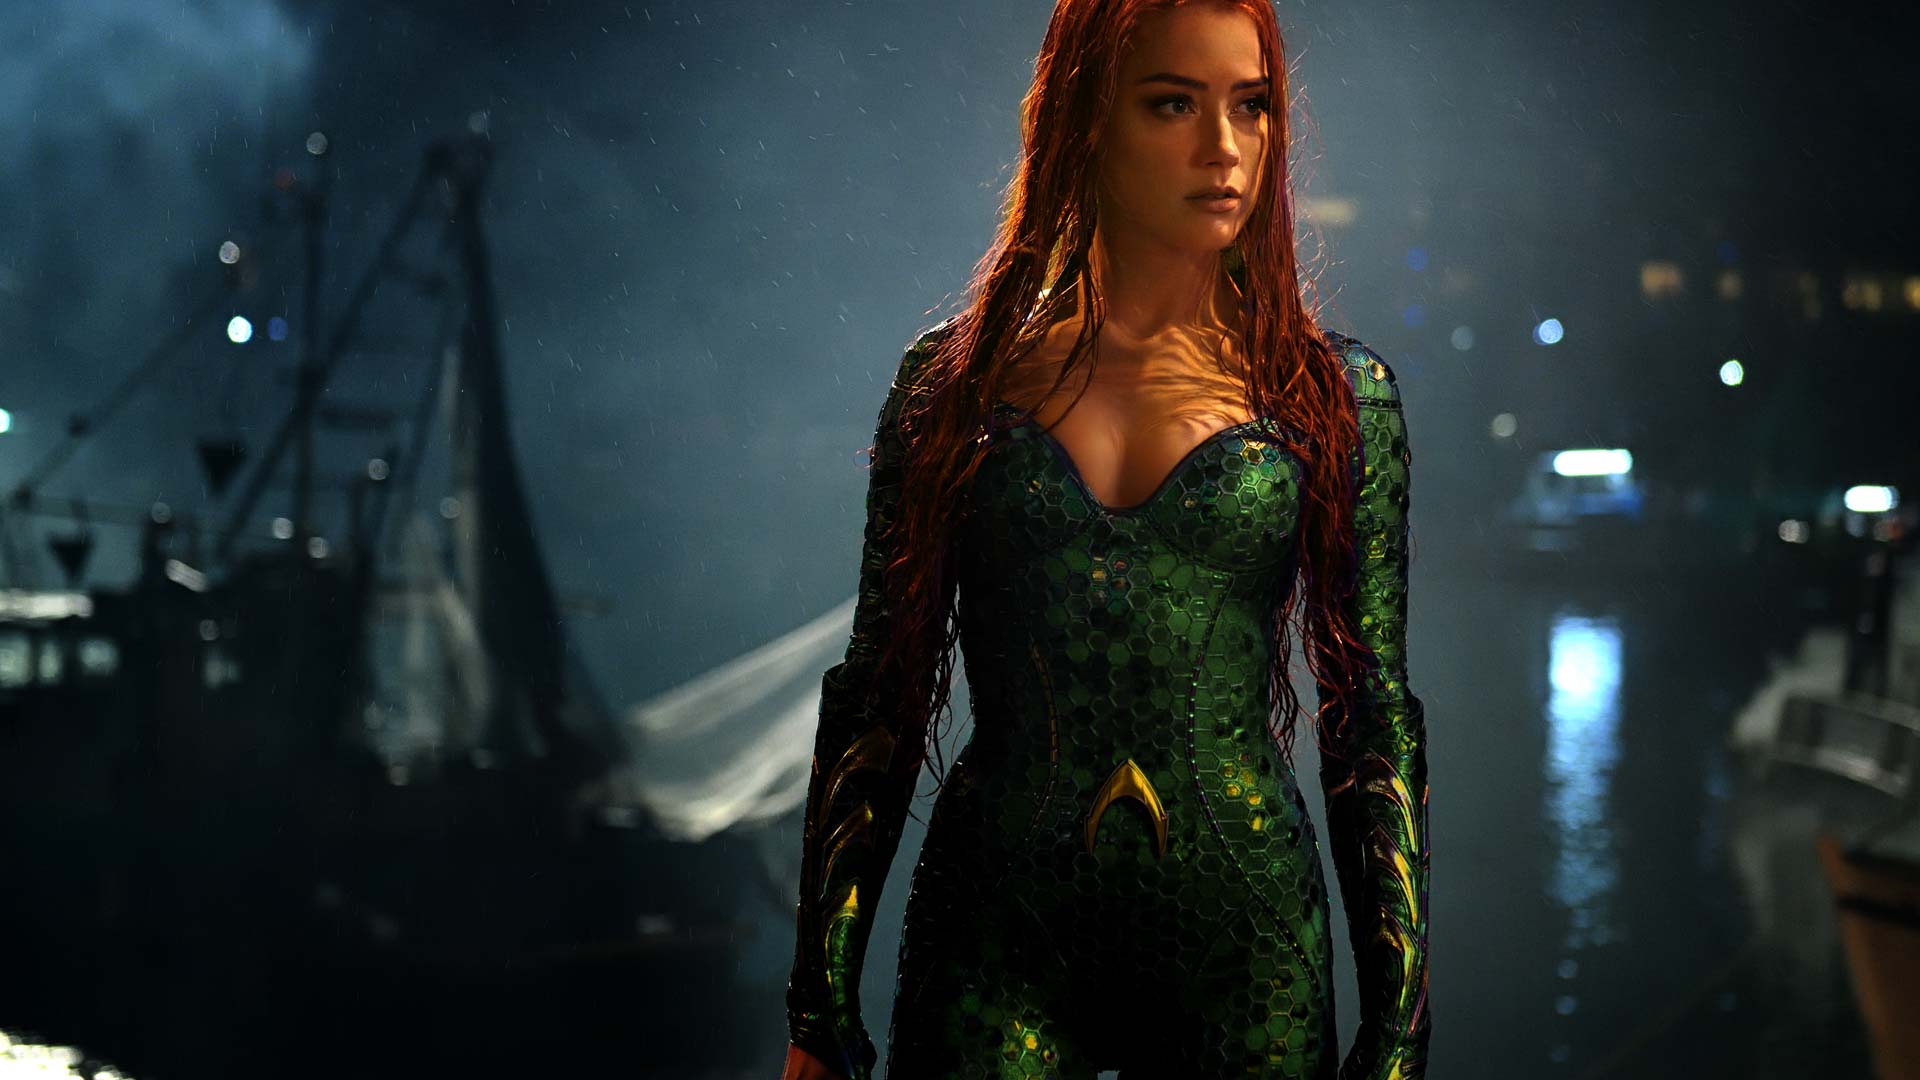 Emilia Clarke substitui Amber Heard em Aquaman 2; veja foto